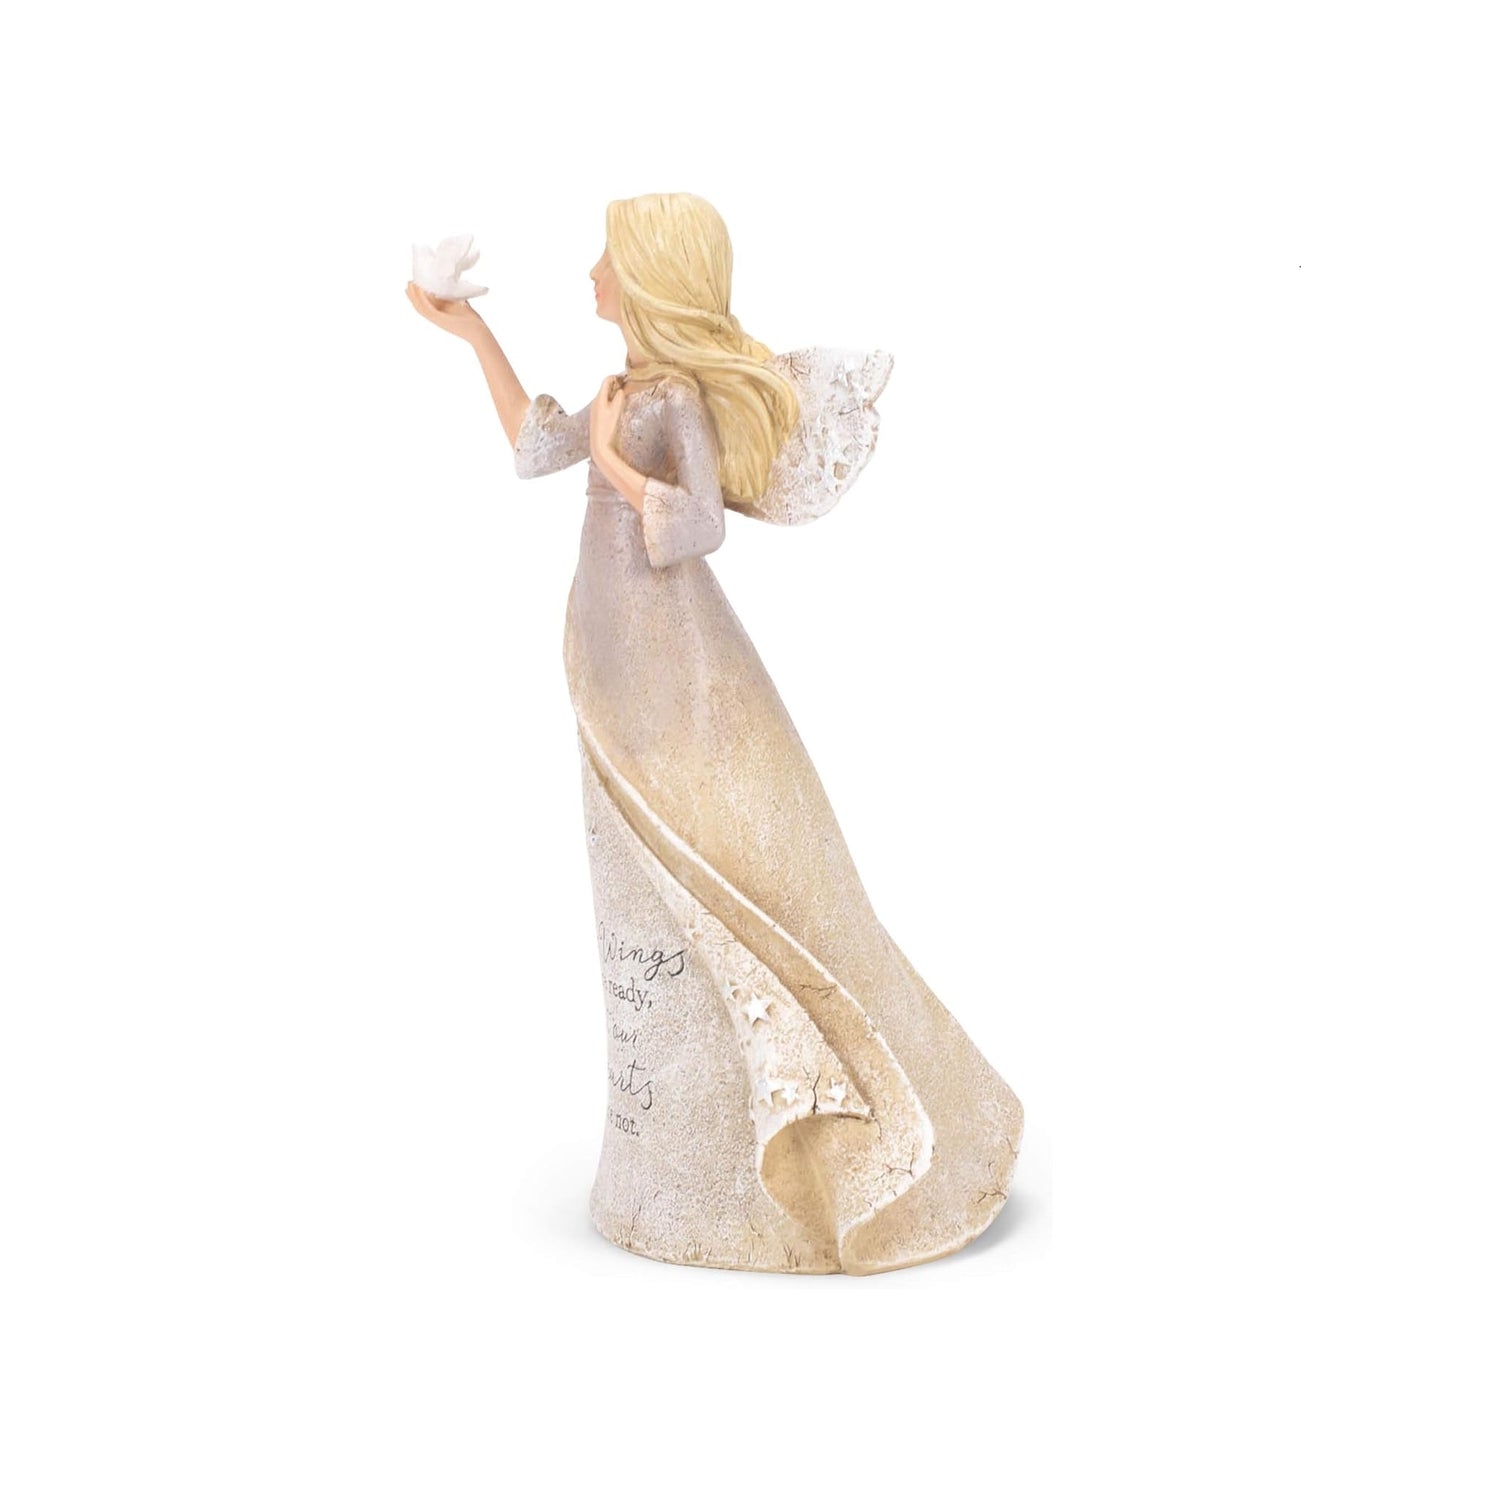 Roman Bereavement Angel Figurine by Karen Hahn